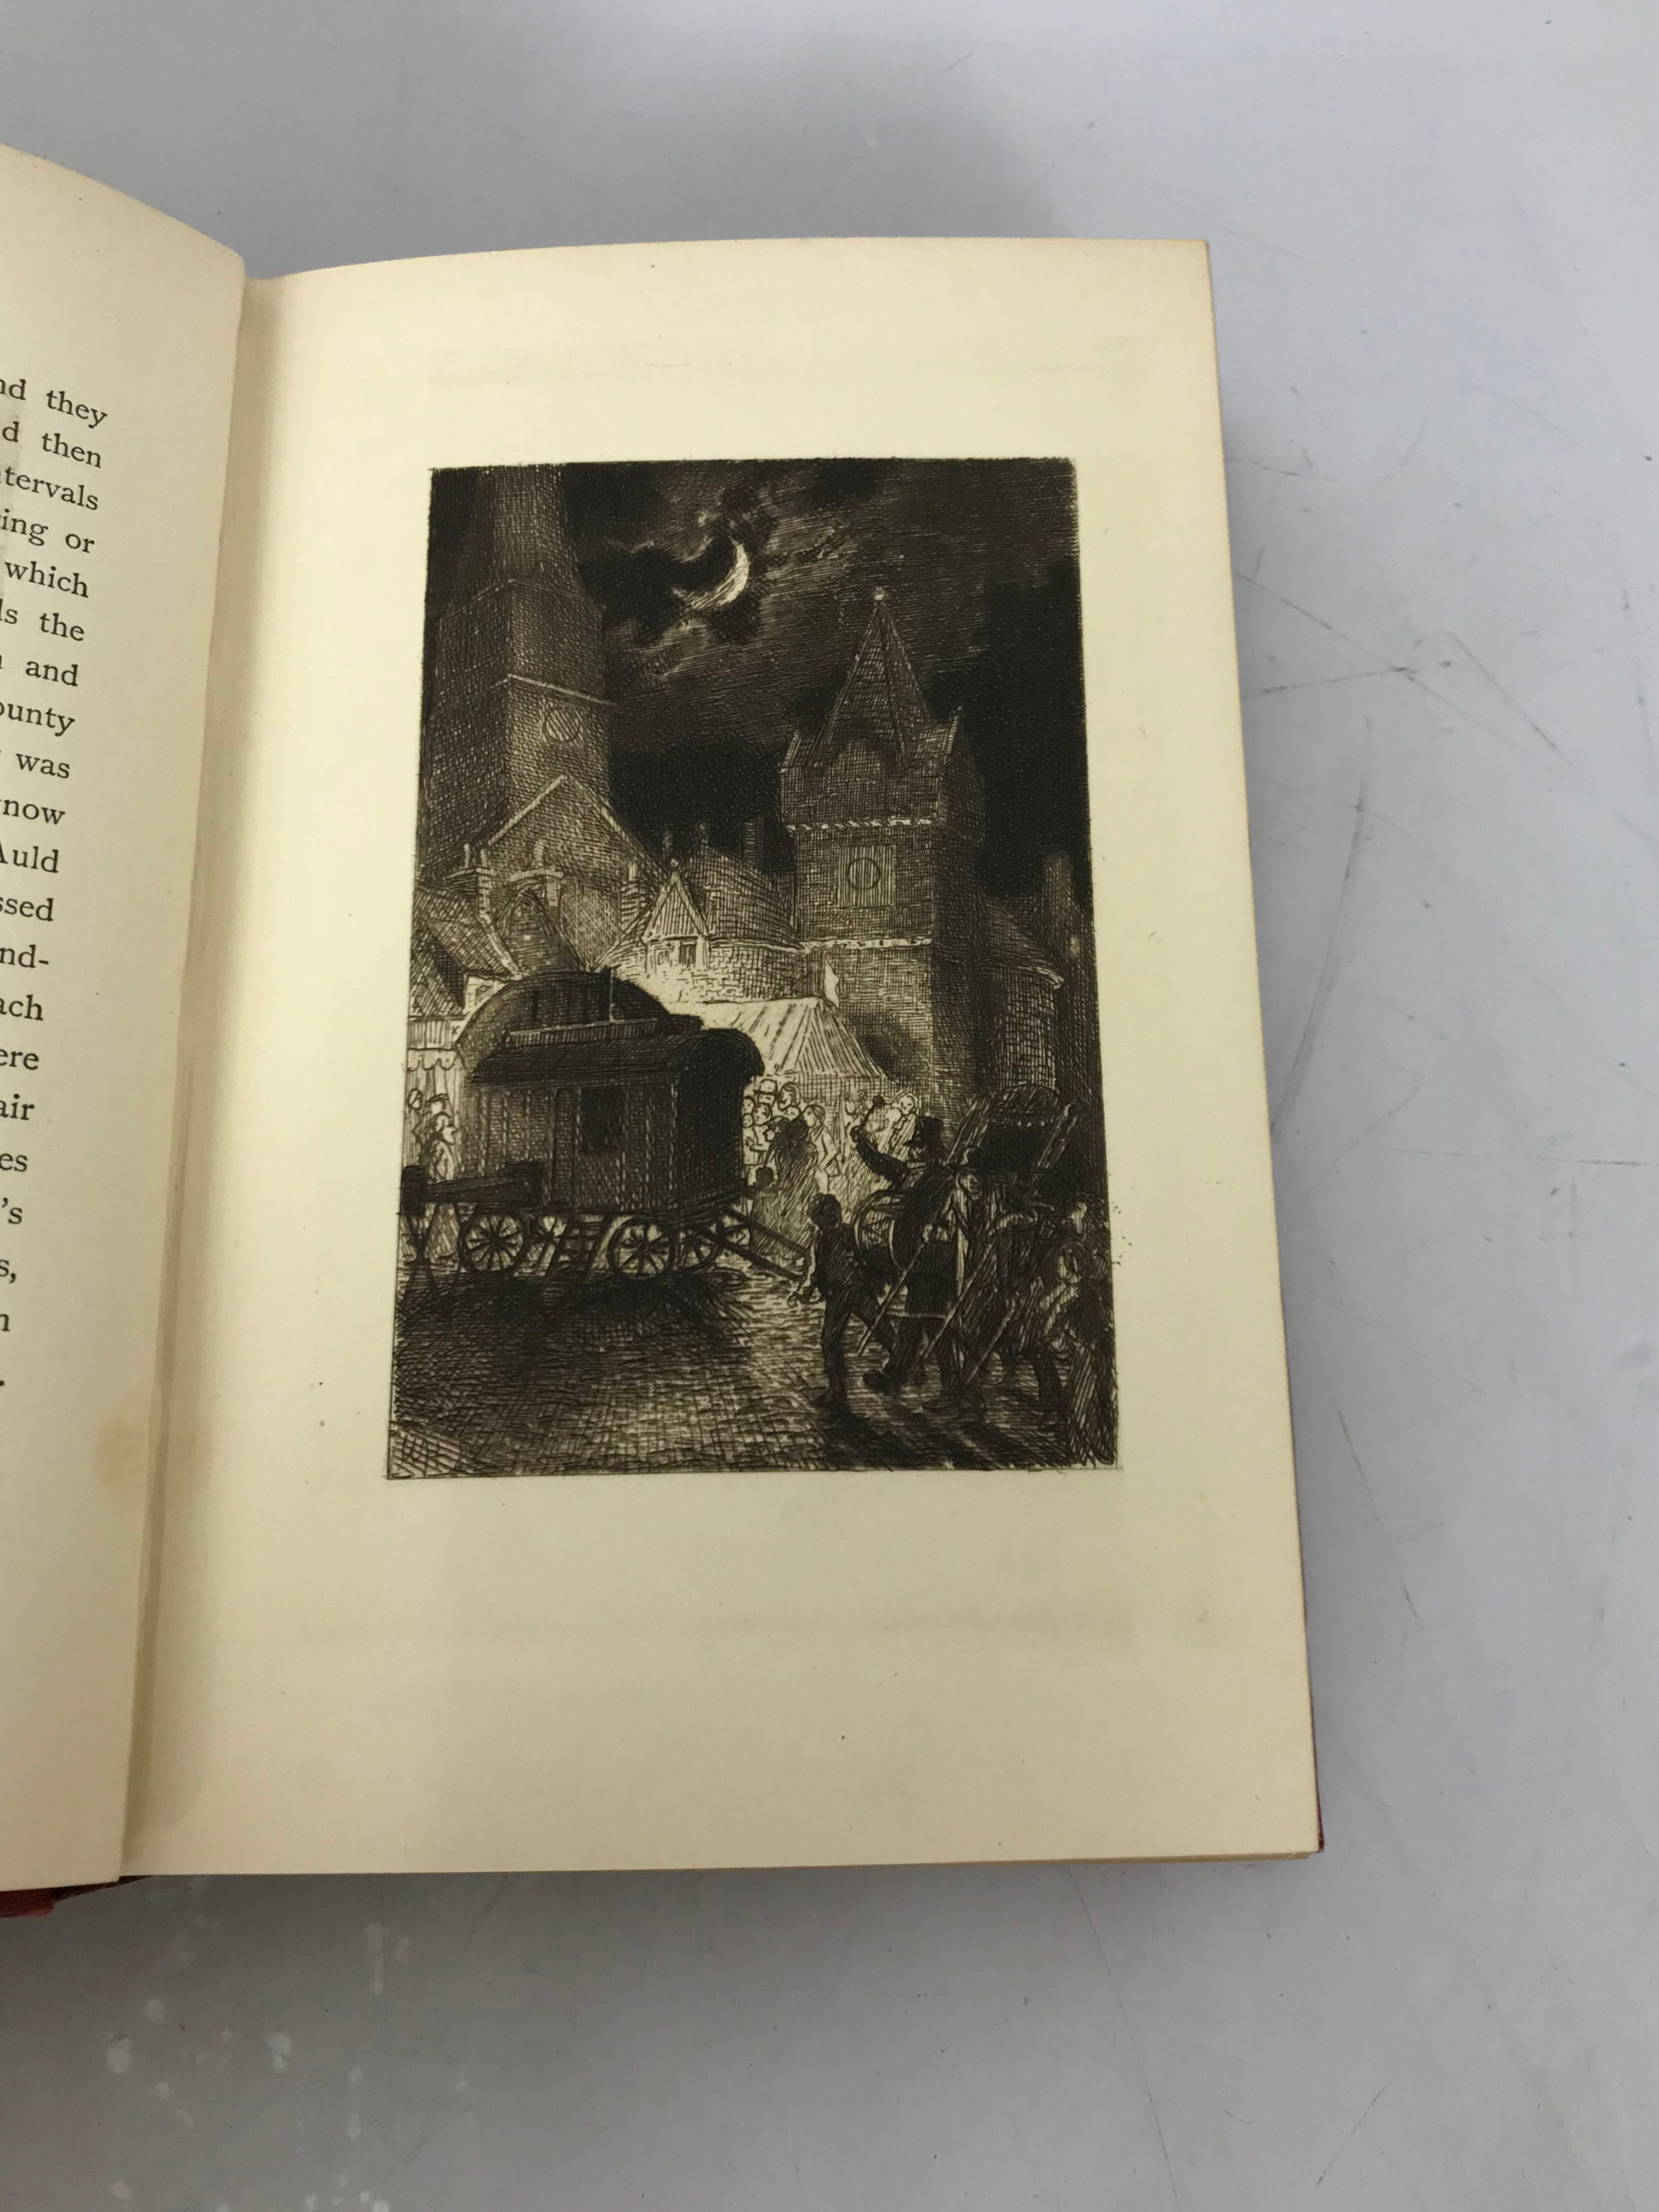 Auld Licht Idylls Popular Edition by J.M. Barrie 1902